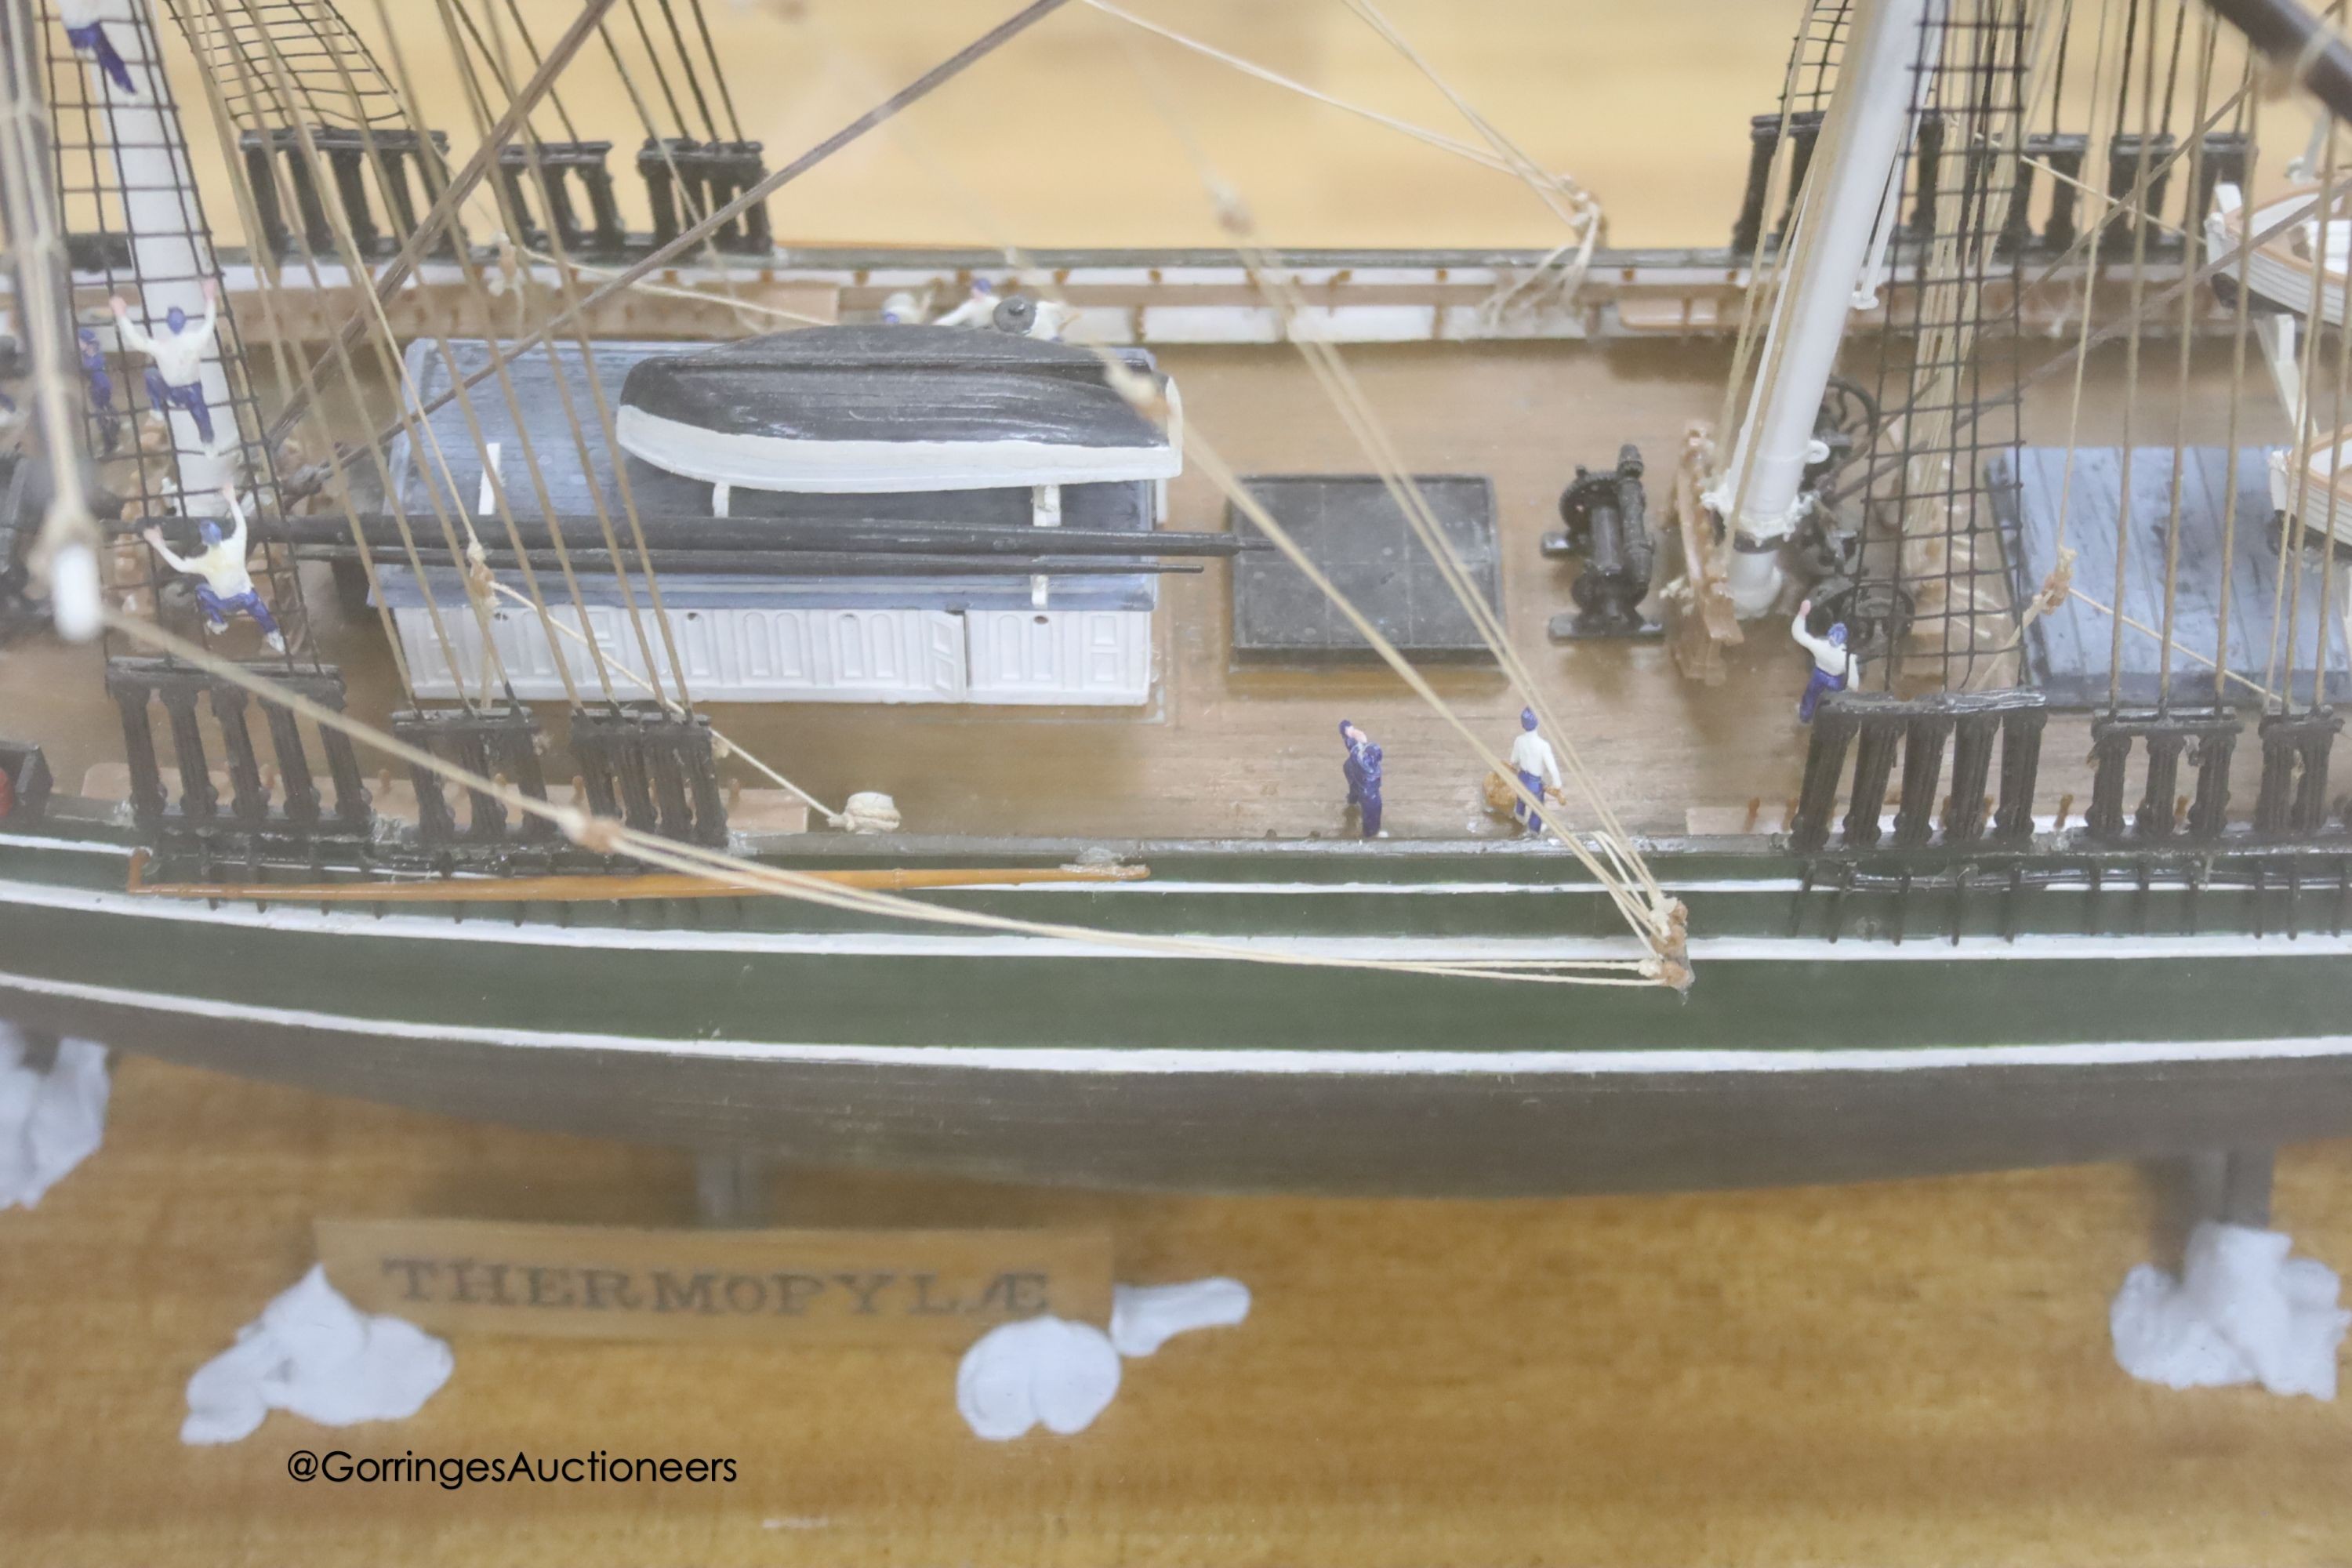 A model of a clipper ship in glazed case